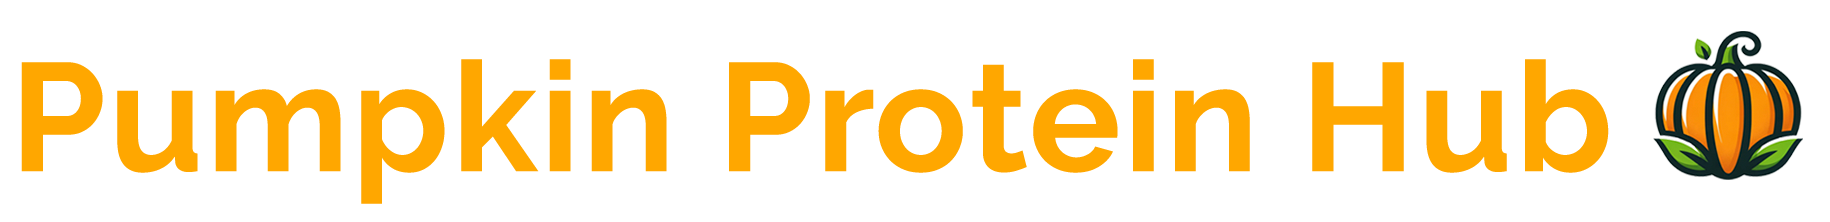 pumpkin protein hub with stylized pumpkin logo